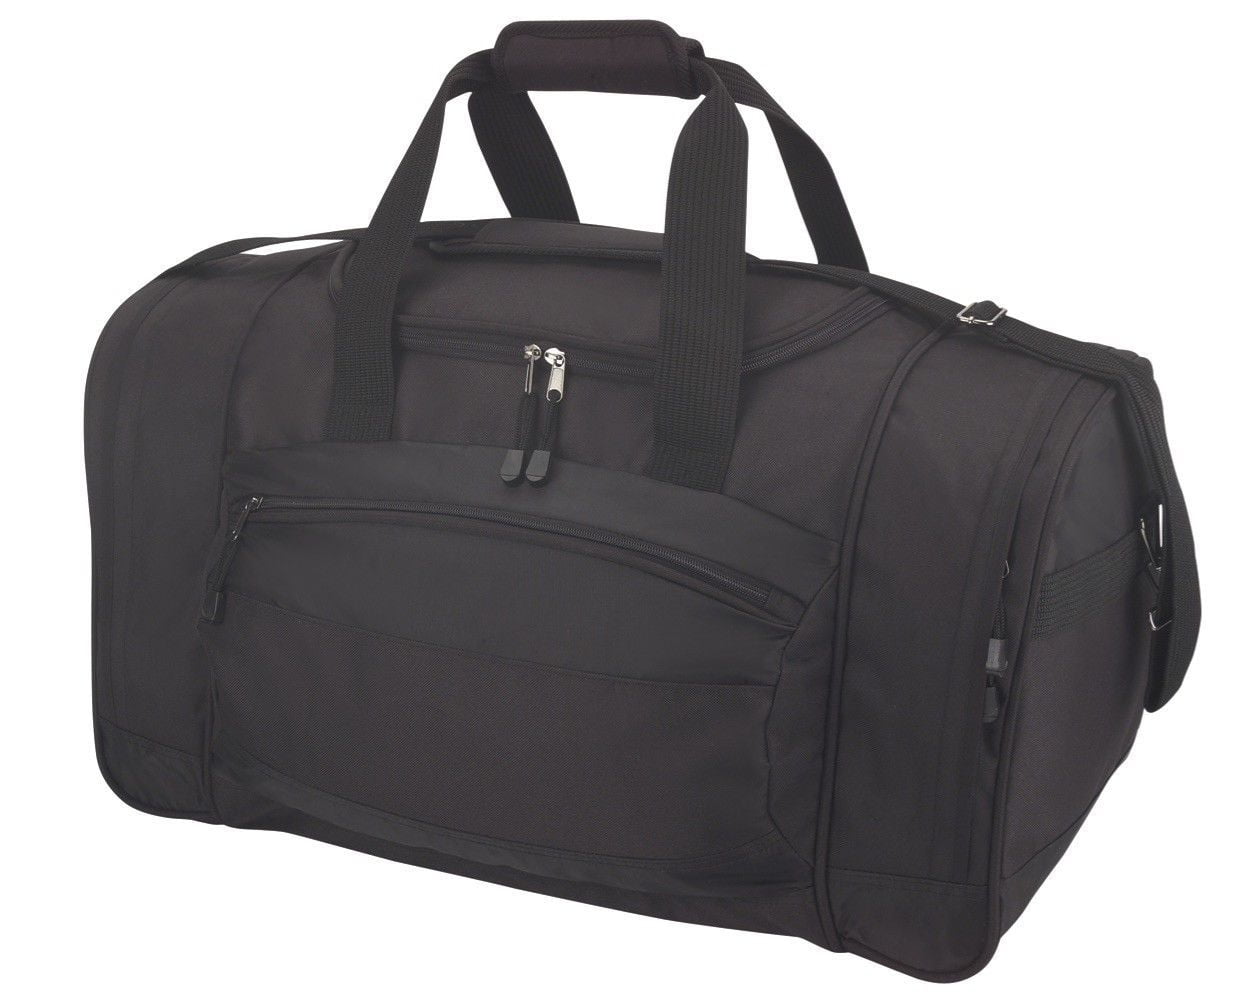 1 Dozen Sports Gym Travel Yoga Bag with Shoe Storage Duffle Black WHOLESALE LOTS 